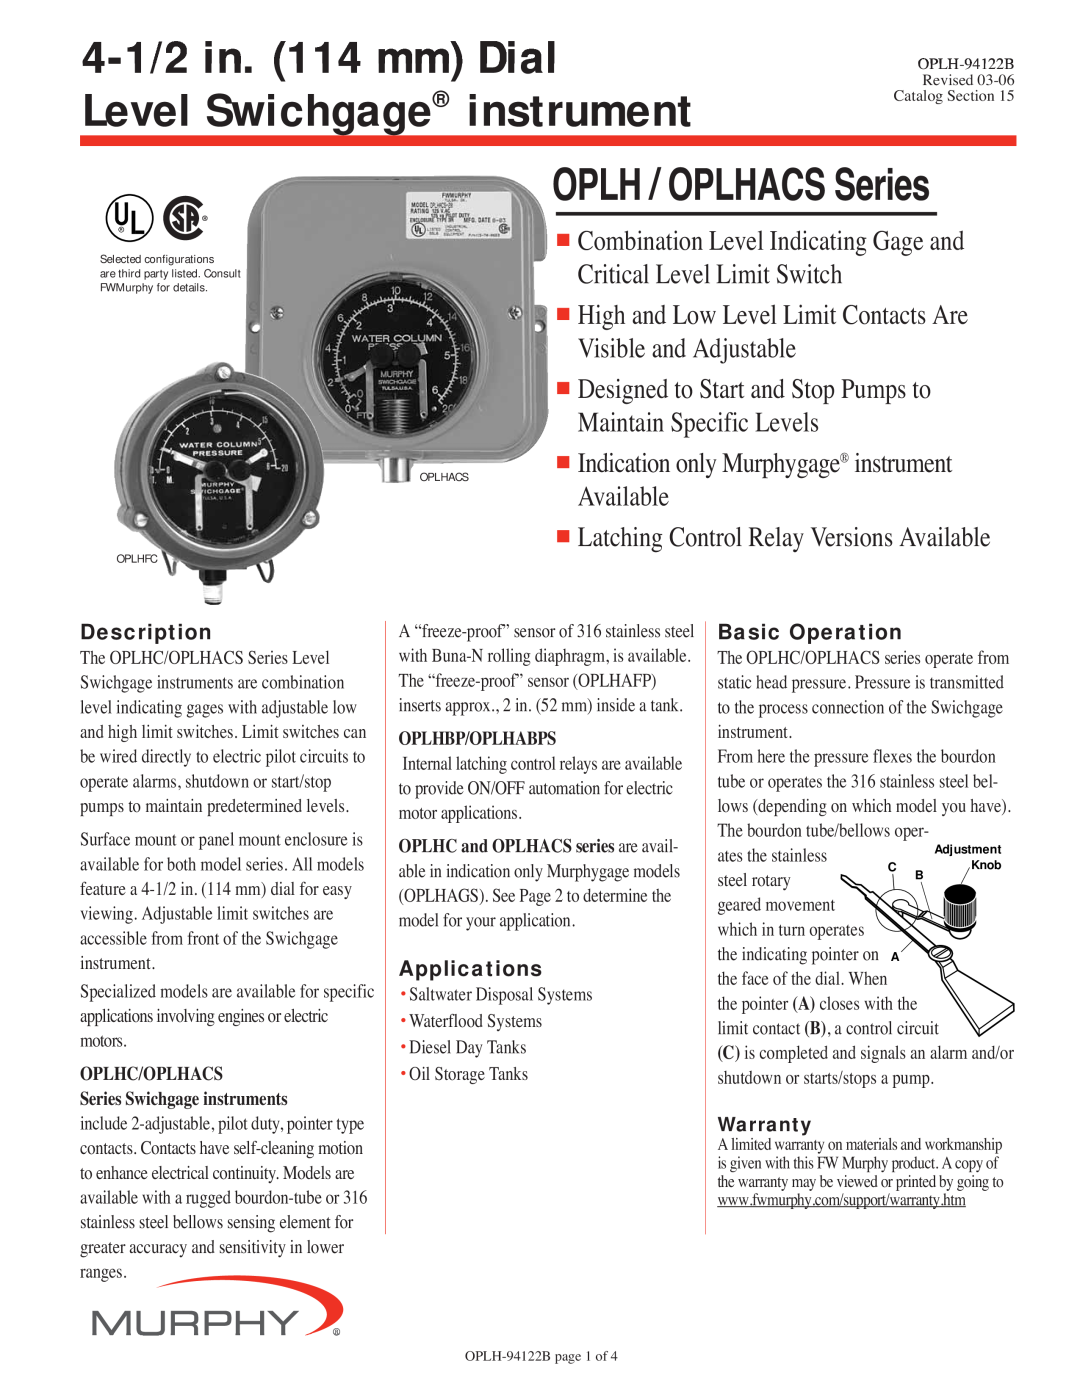 Murphy OPLHACS warranty Description, Applications, Basic Operation, 4-1/2 in. 114 mm Dial Level Swichgage instrument 